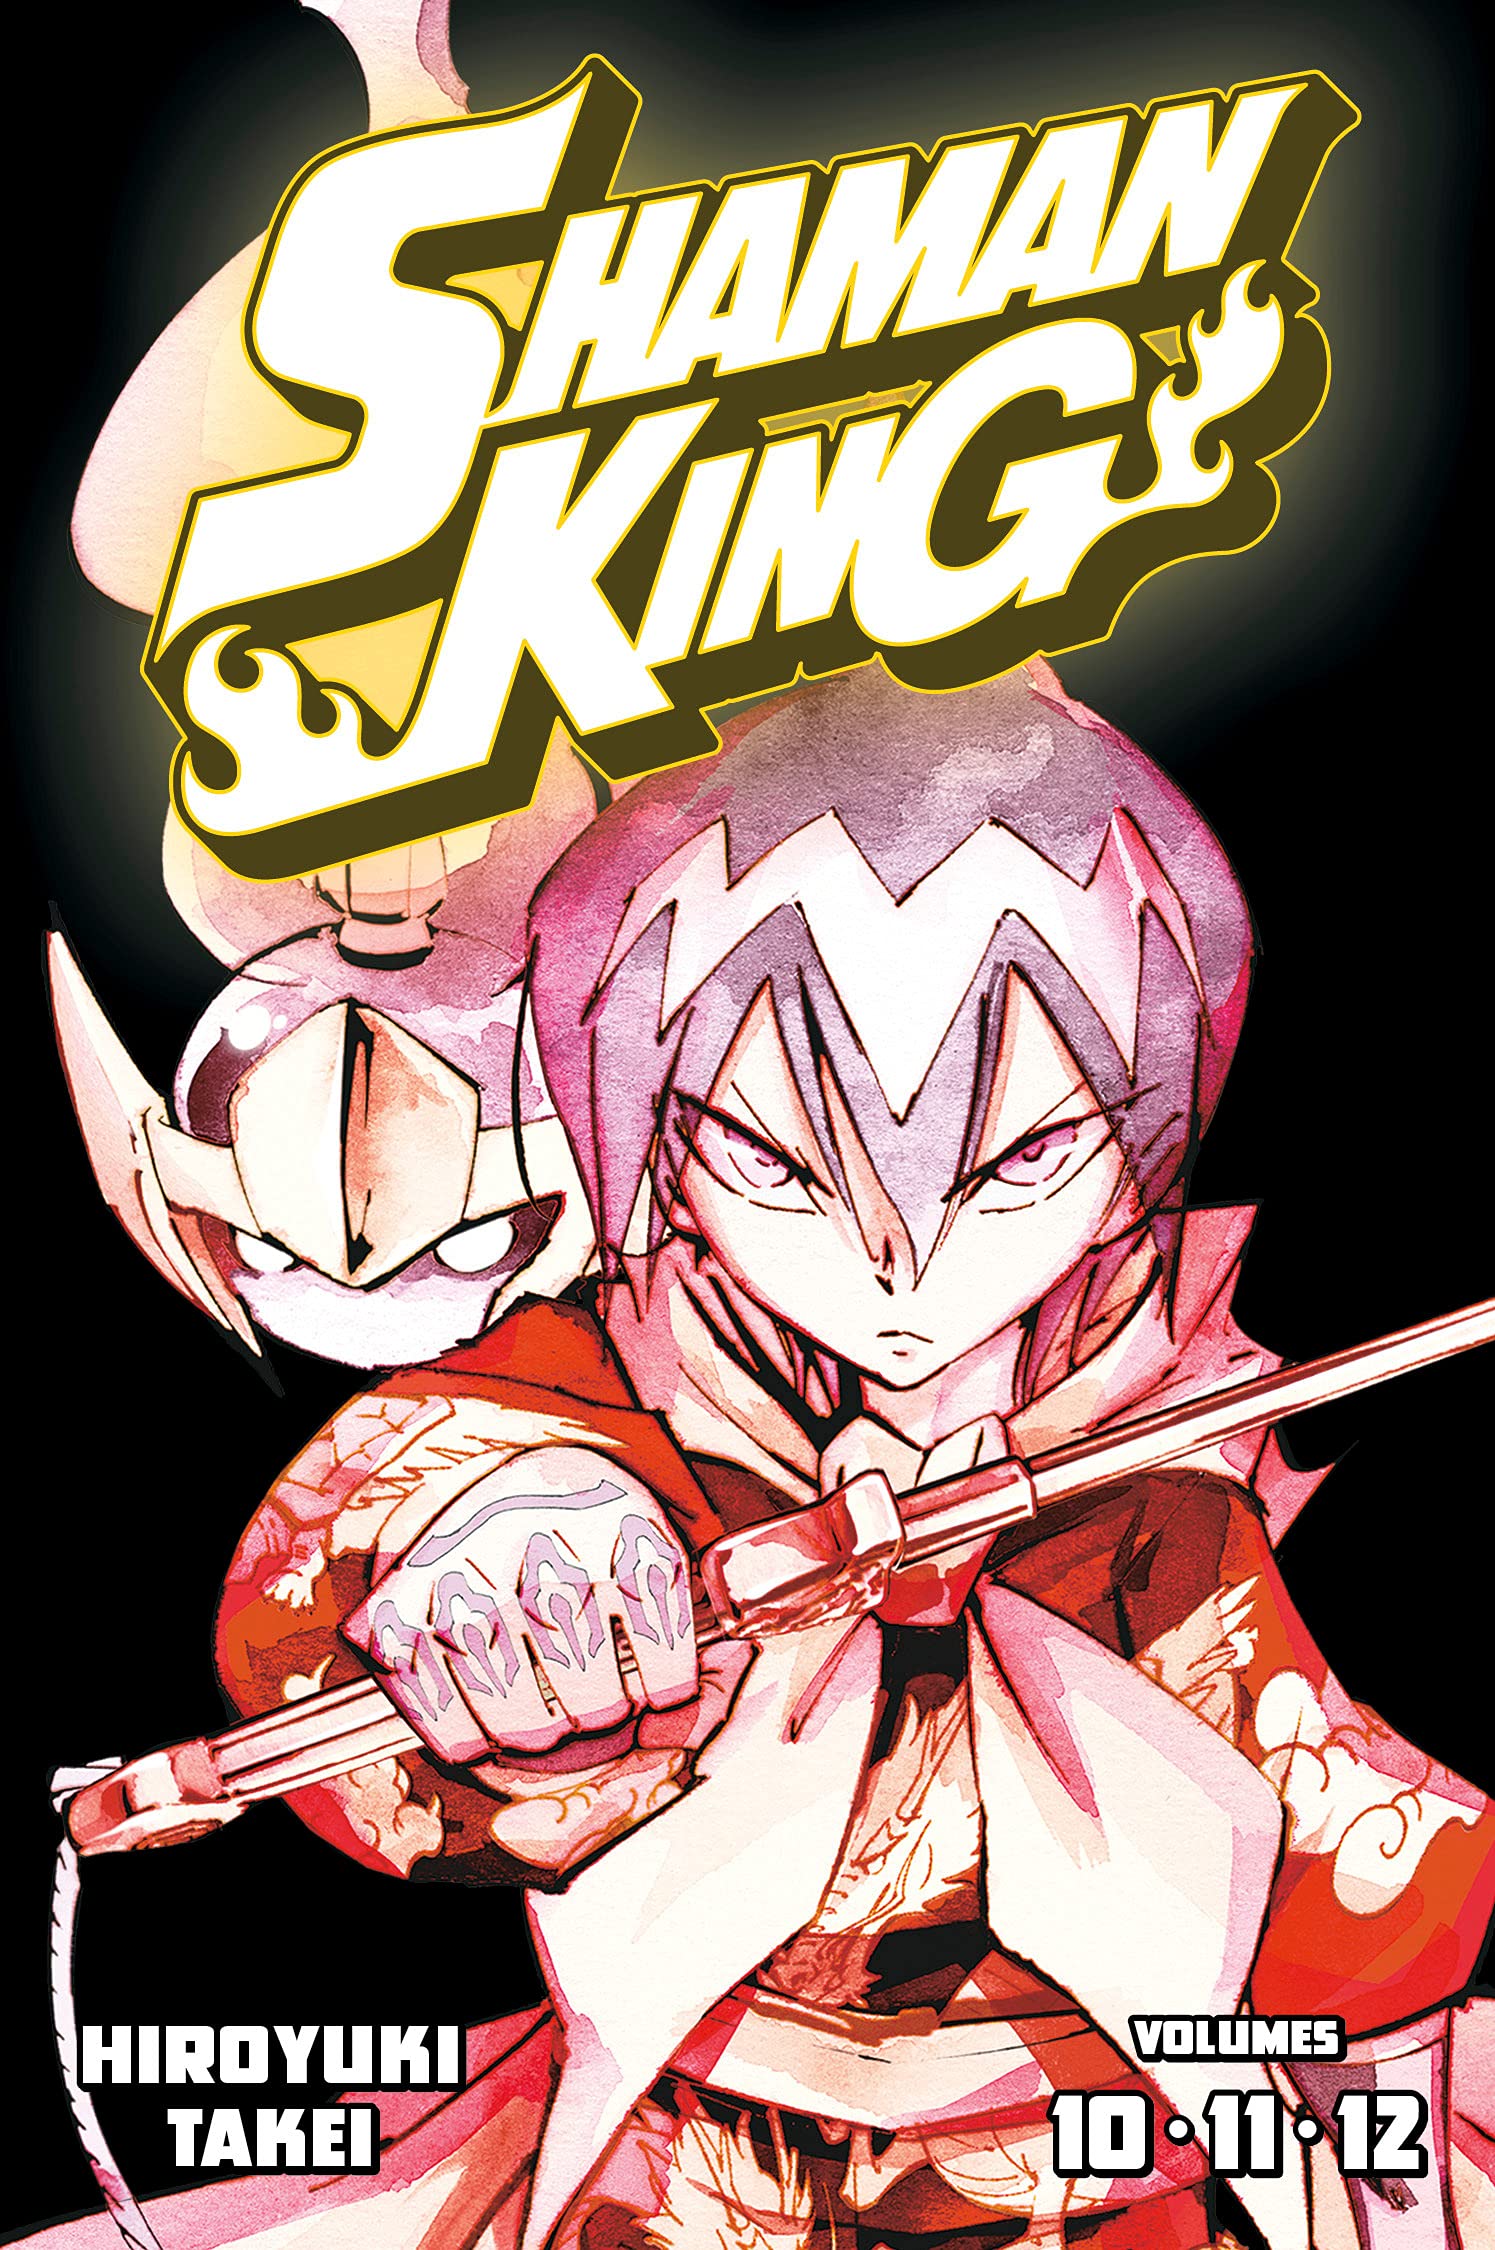 Shaman King Omnibus 4 - Volume 10-12 | Hiroyuki Takei